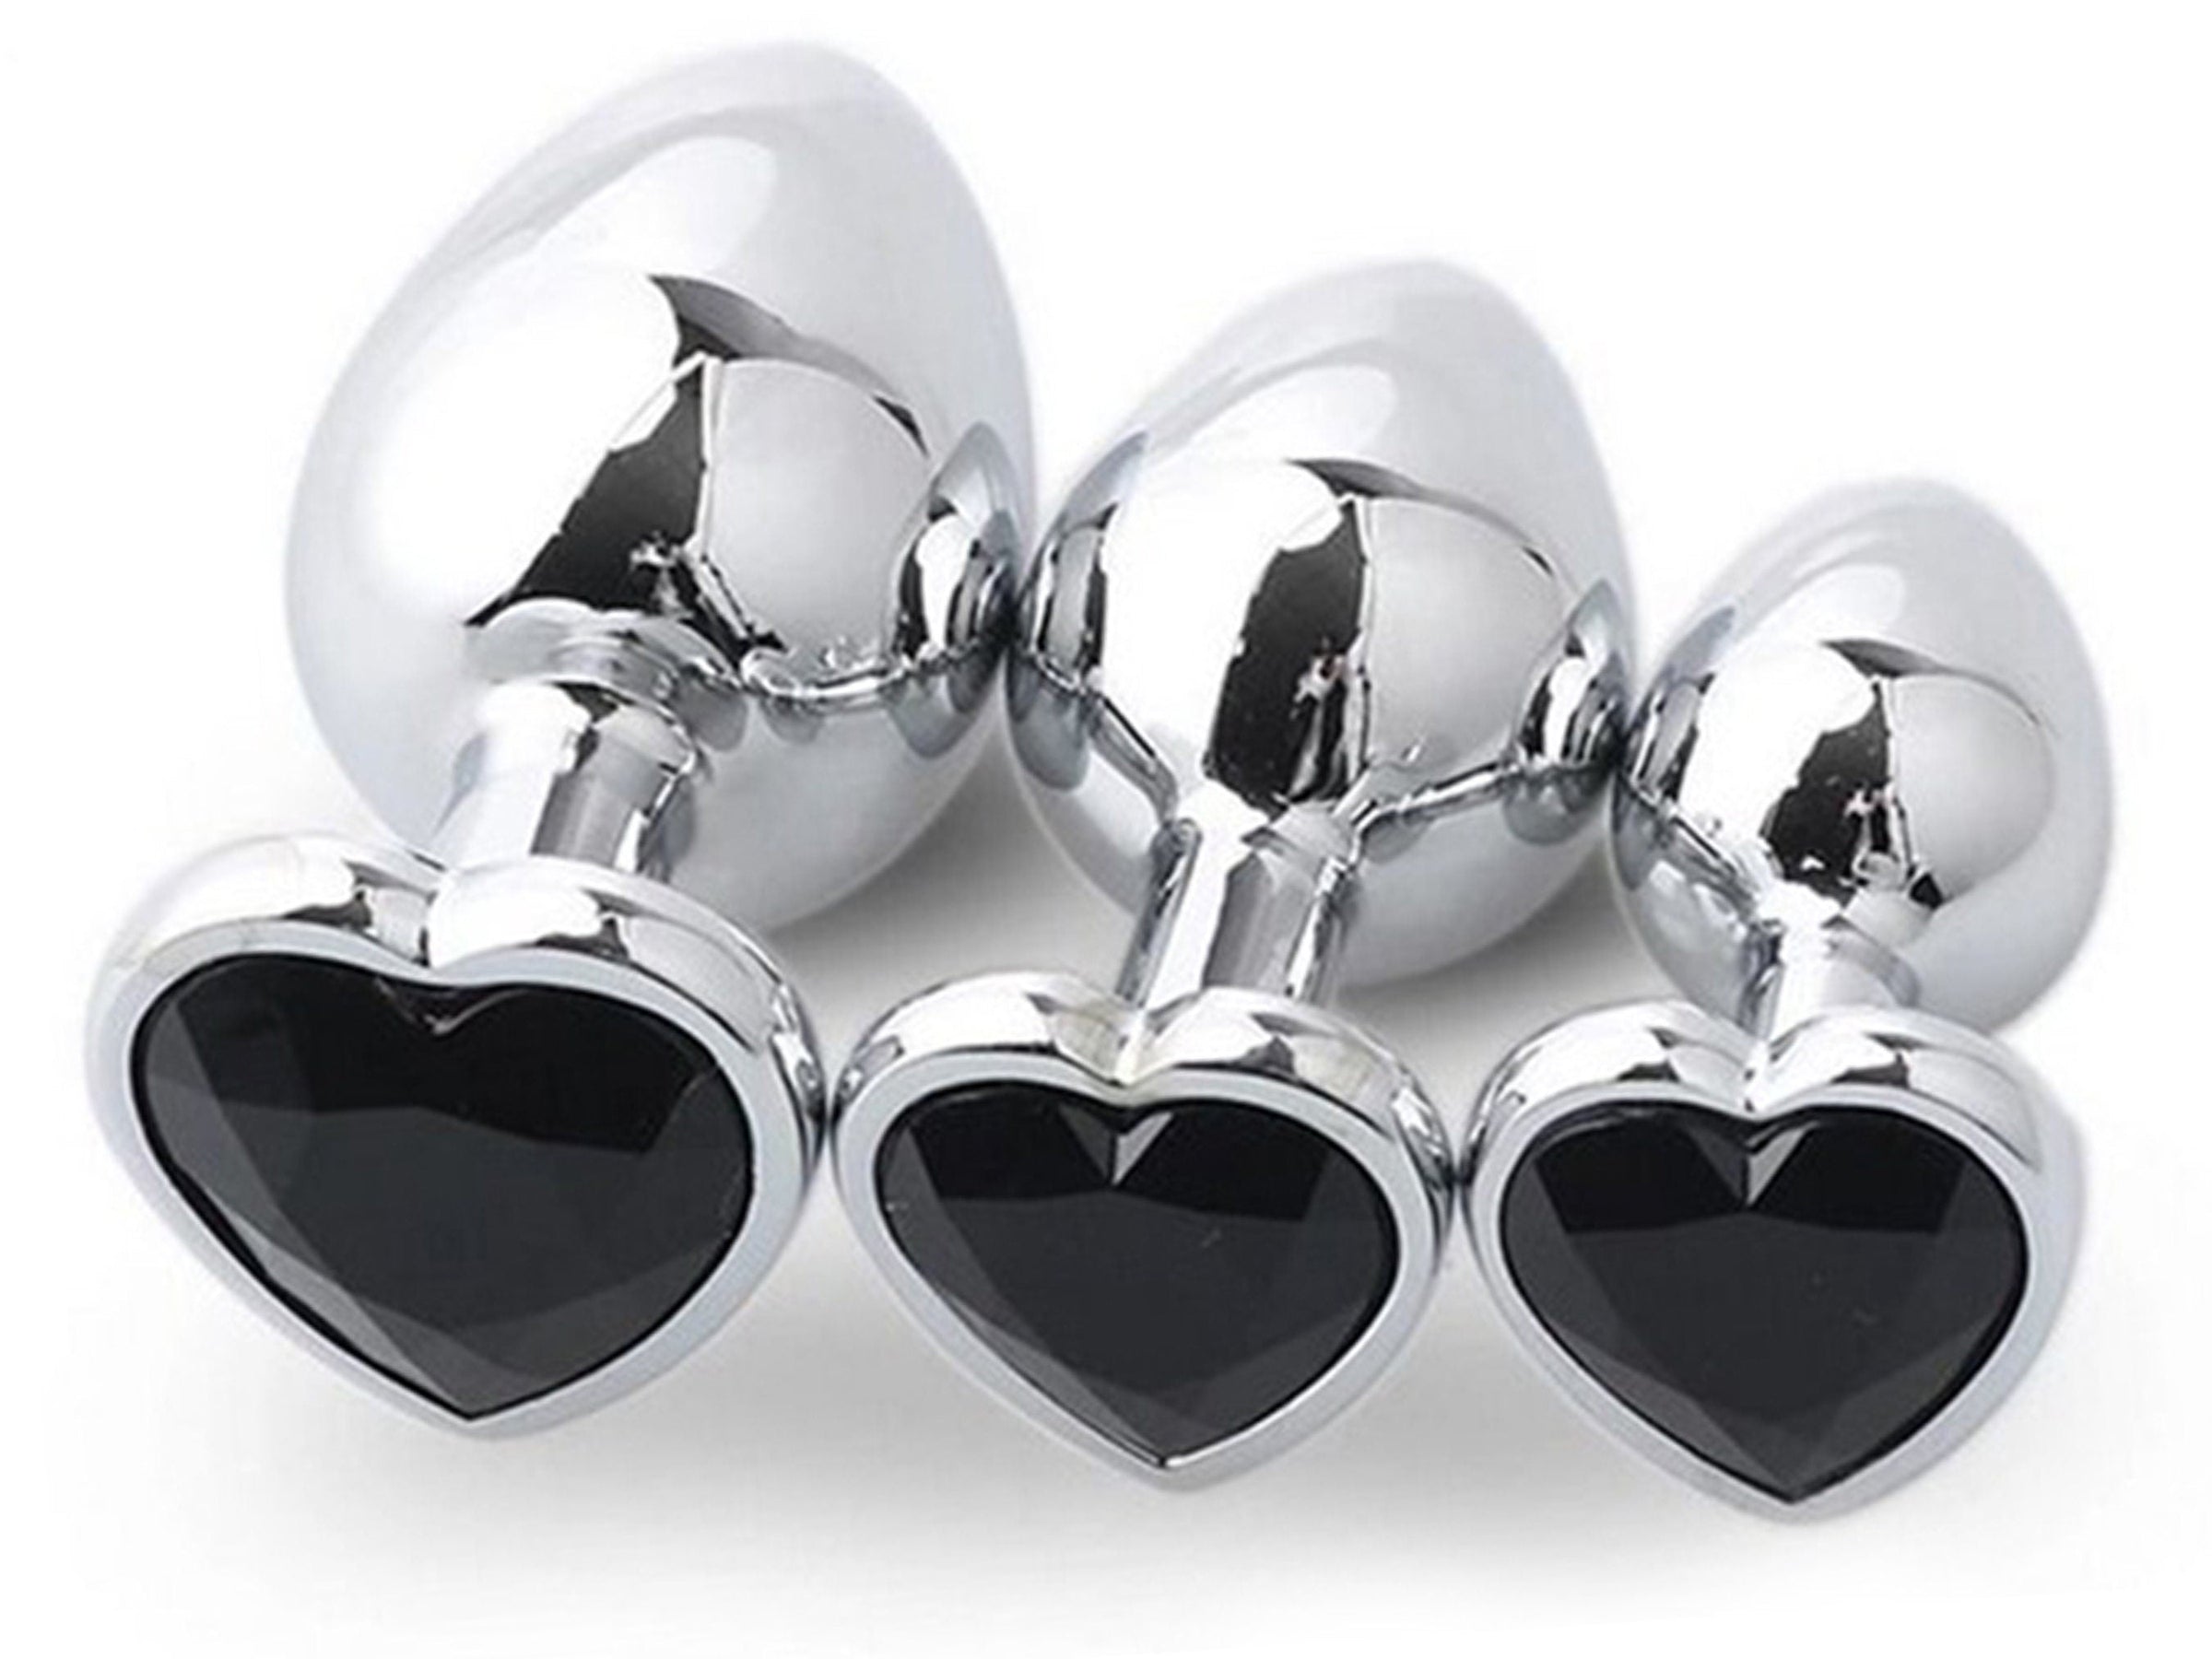 BLACK HEART Shaped Acrylic Crystal Butt plug 3 sizes anal toy sex jewe image photo